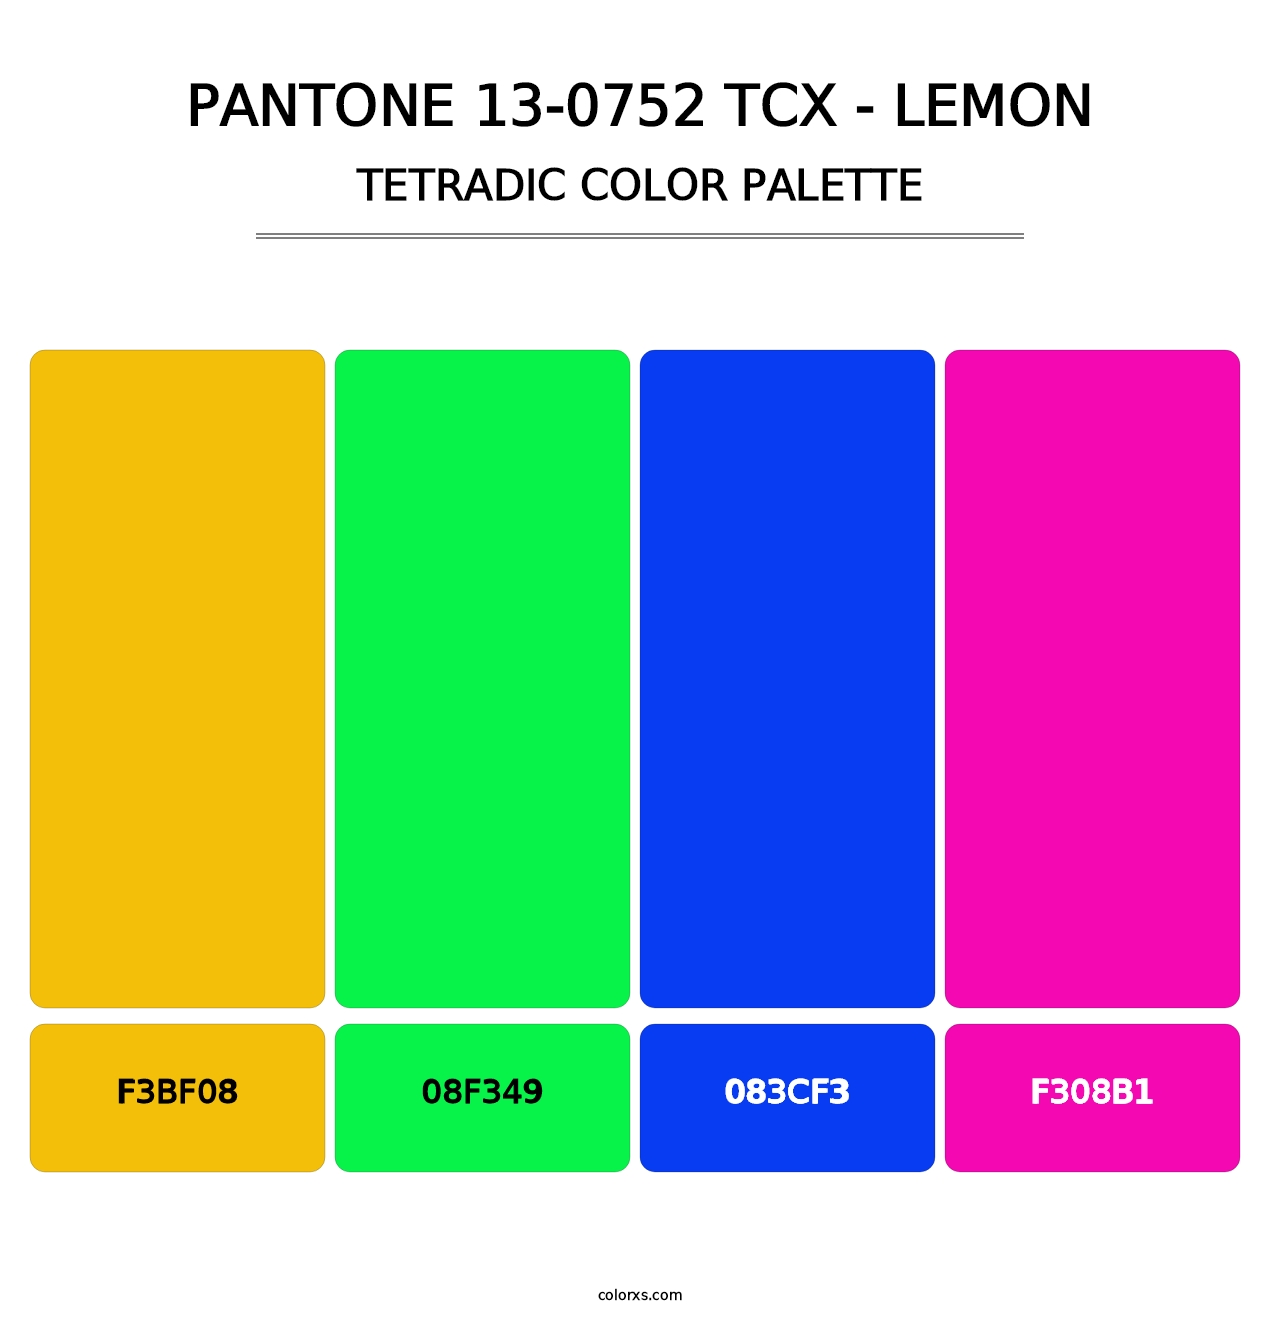 PANTONE 13-0752 TCX - Lemon - Tetradic Color Palette